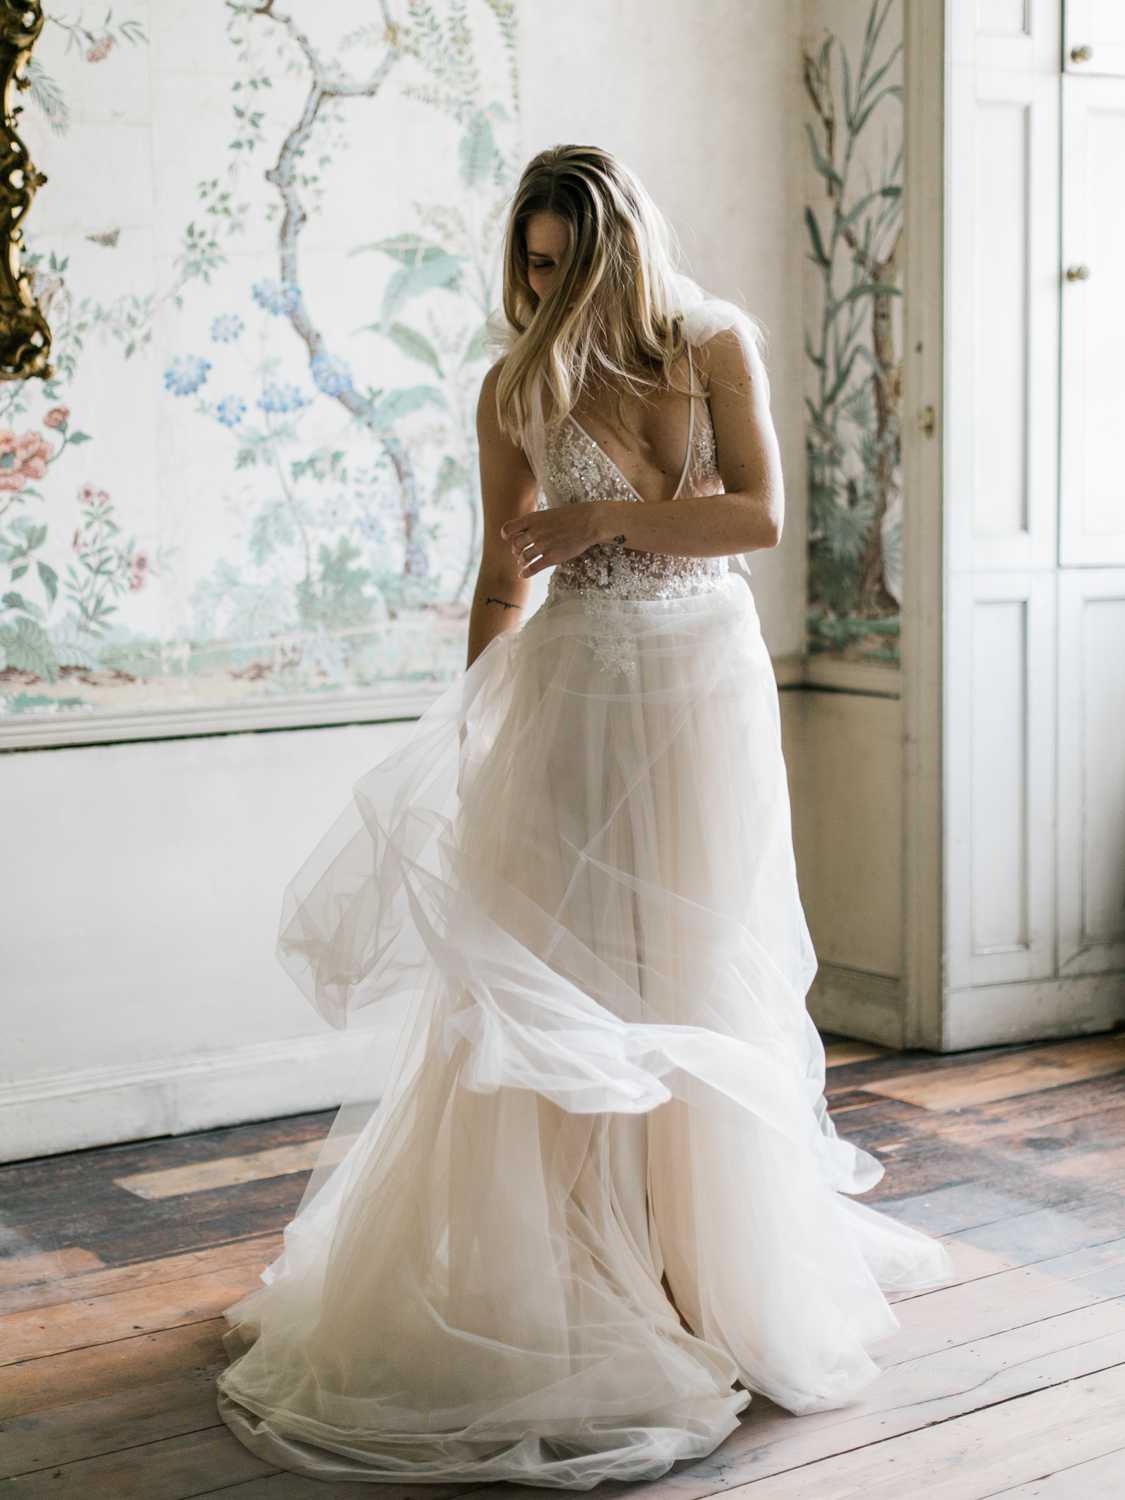 Romantic, elegant wedding photography featuring Inbal Dror wedding dress at St Giles House.